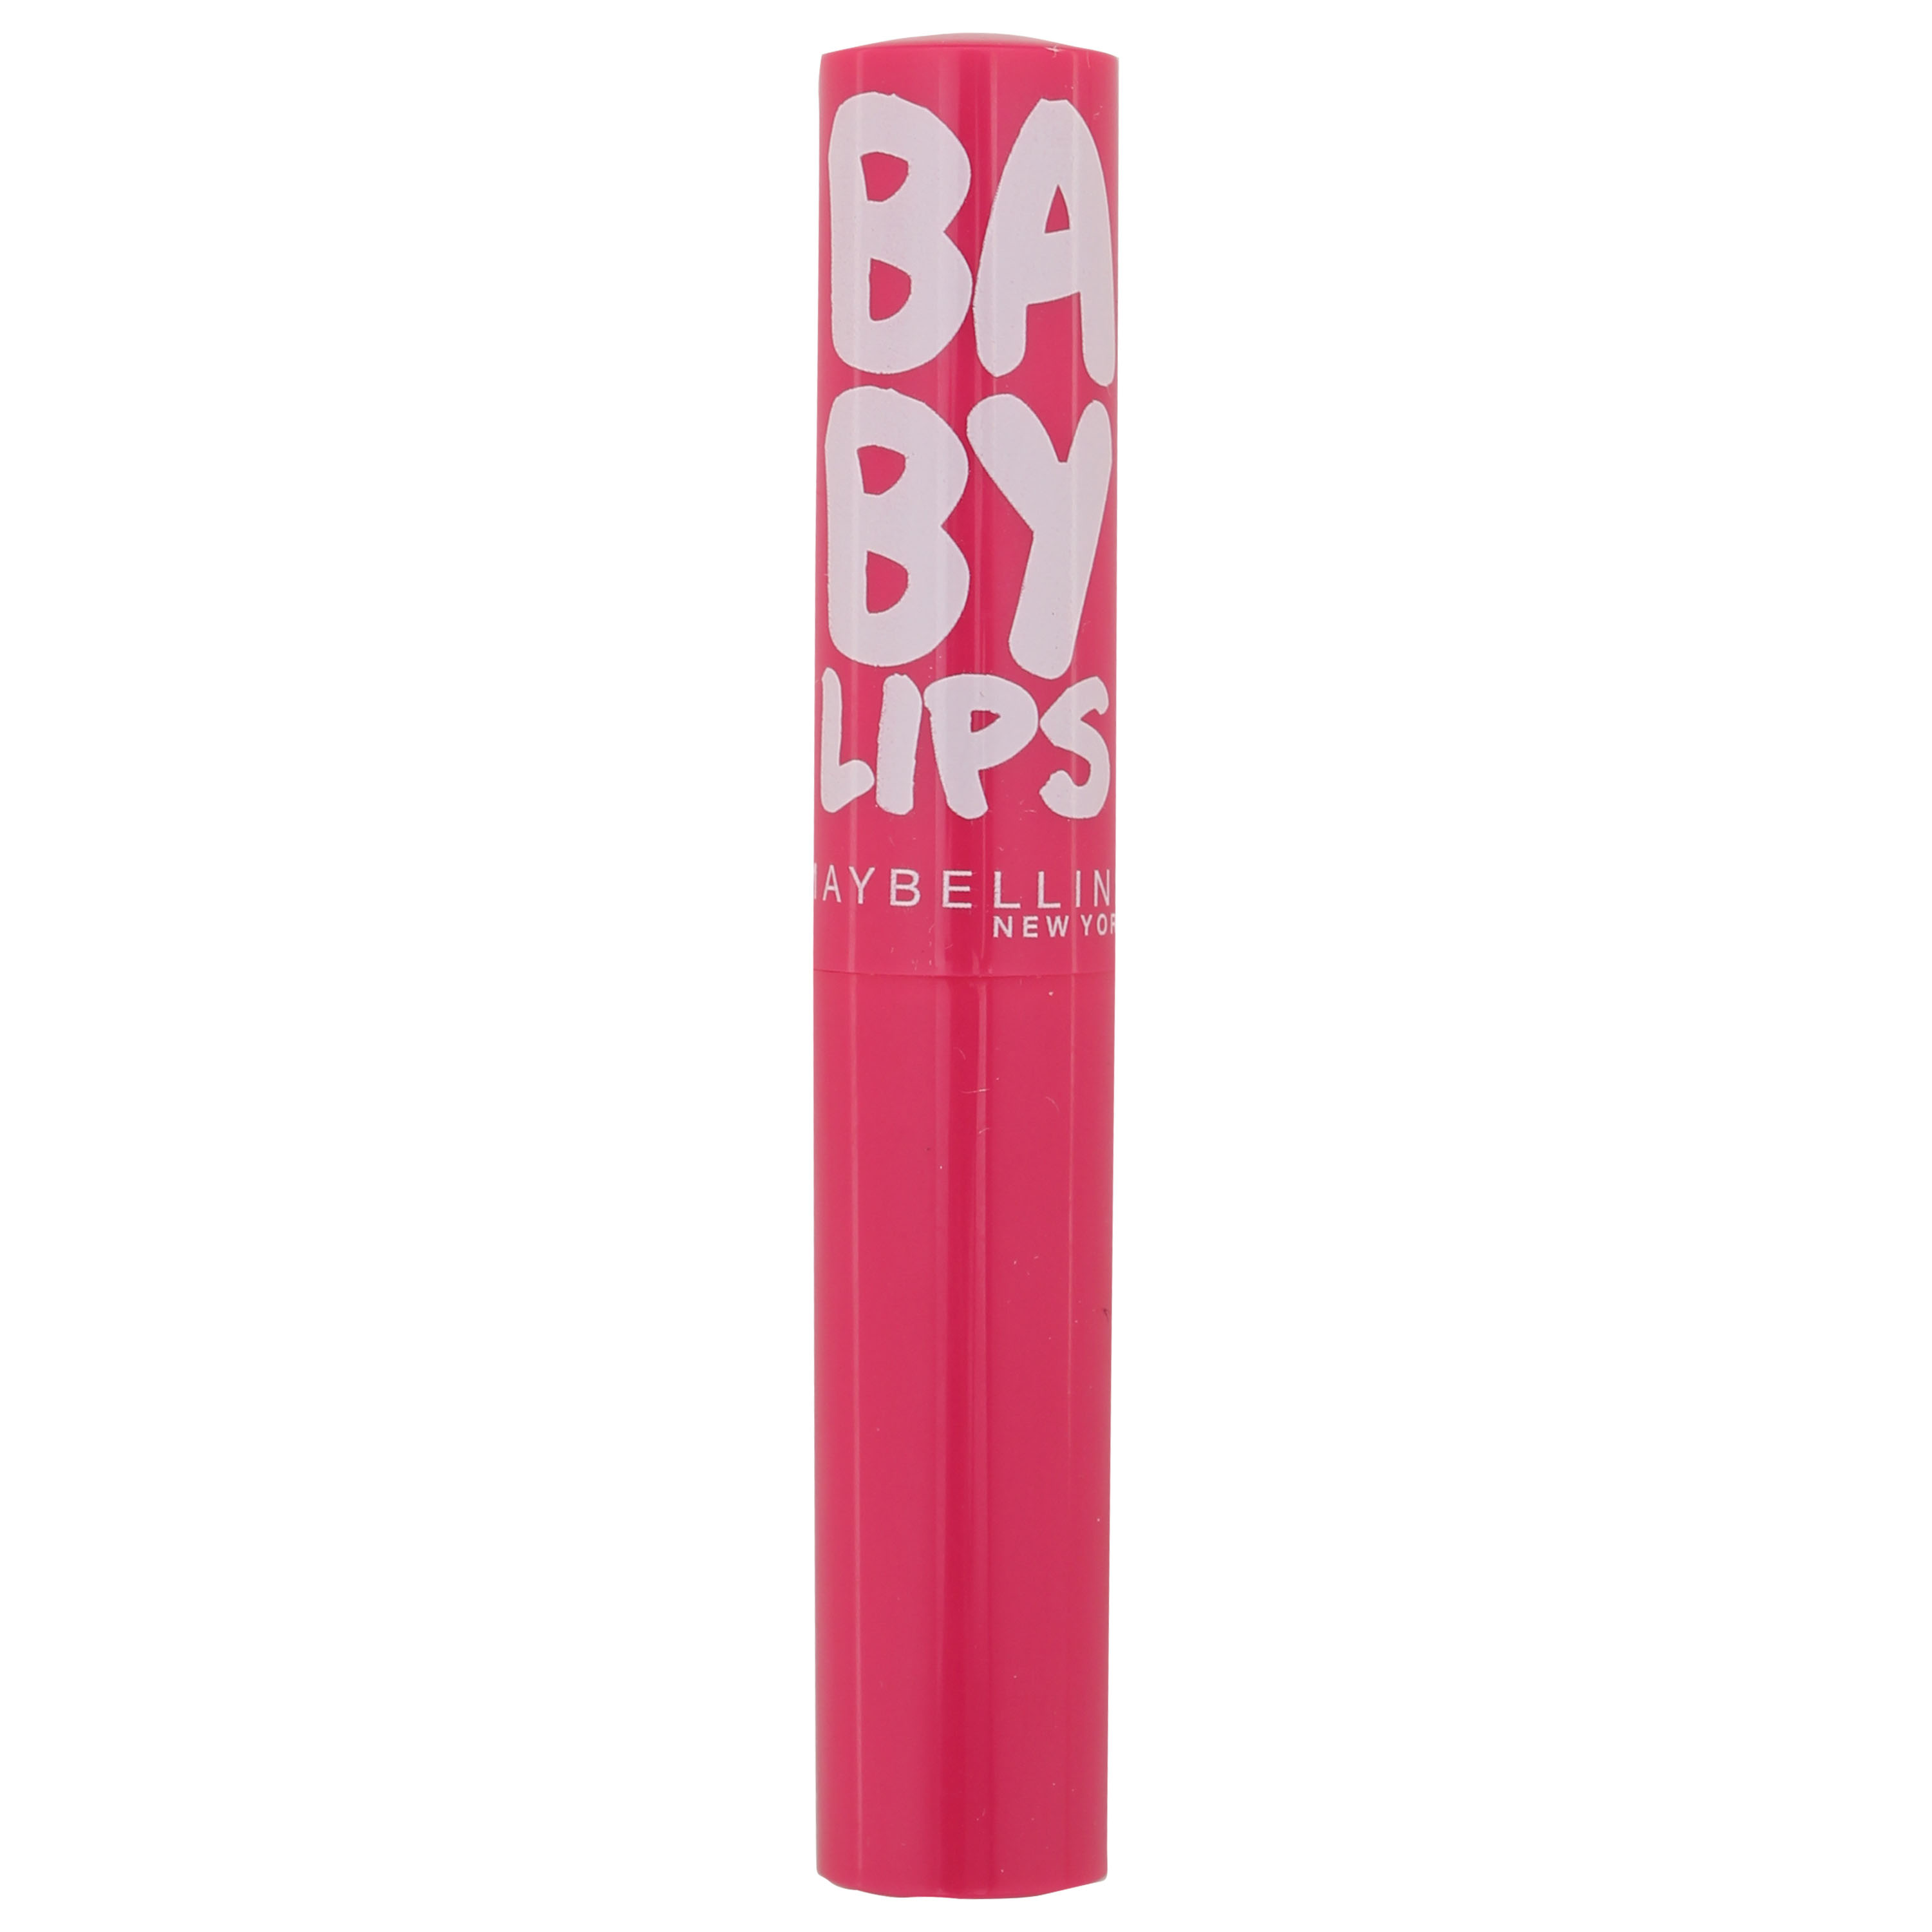 Maybelline Baby Lips Glow Balm, $1.88